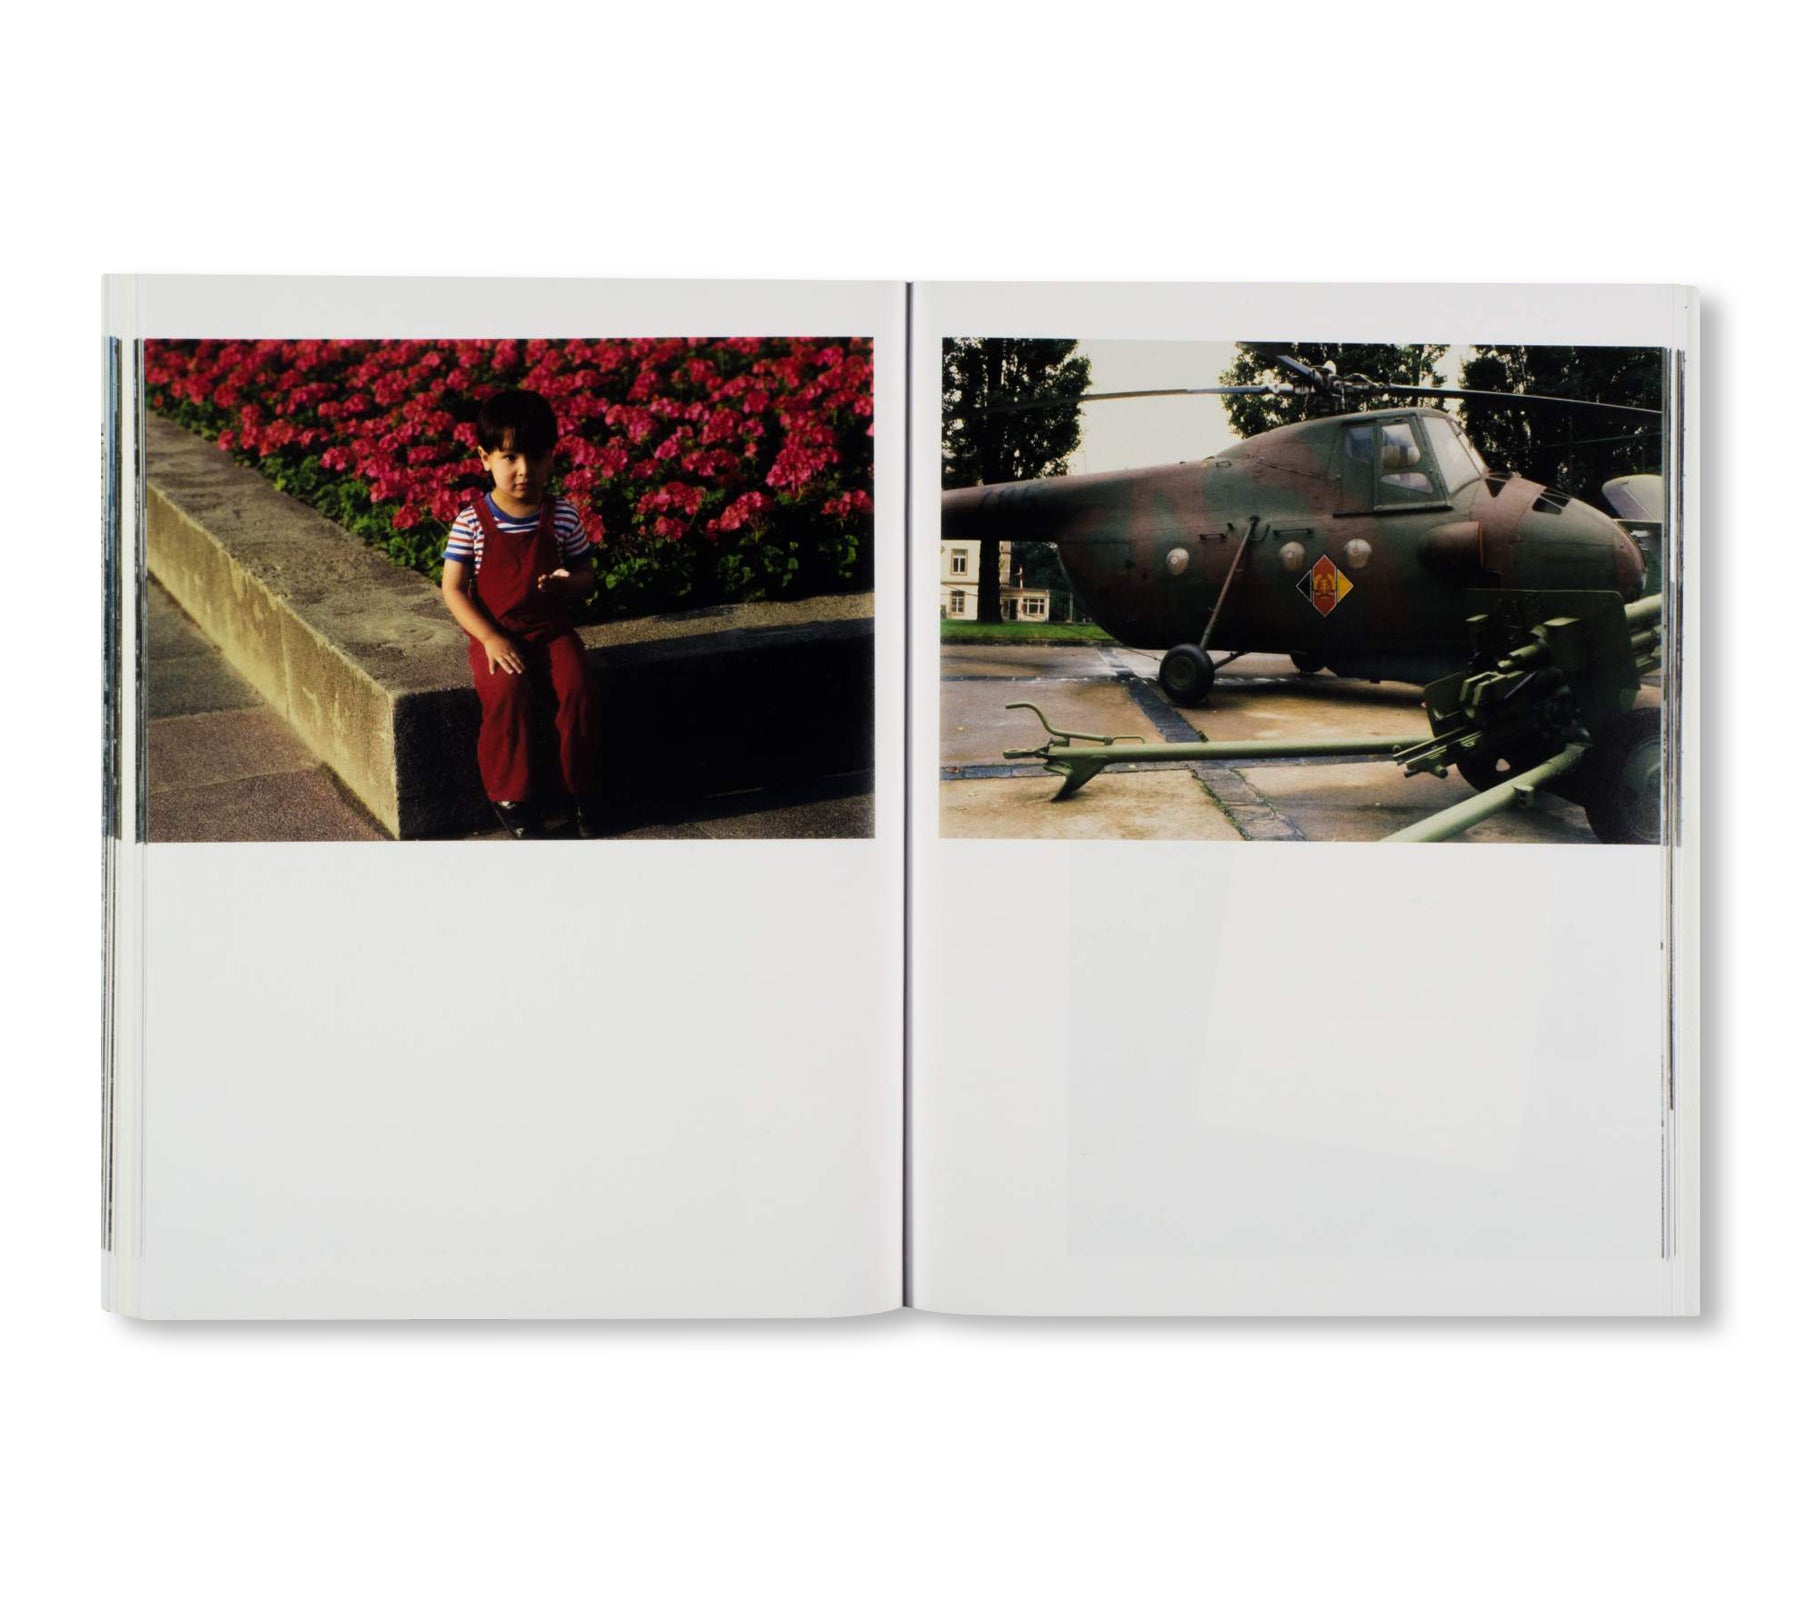 WHY DRESDEN - PHOTOGRAPHS 1984/85 & 2015 by Seiichi Furuya